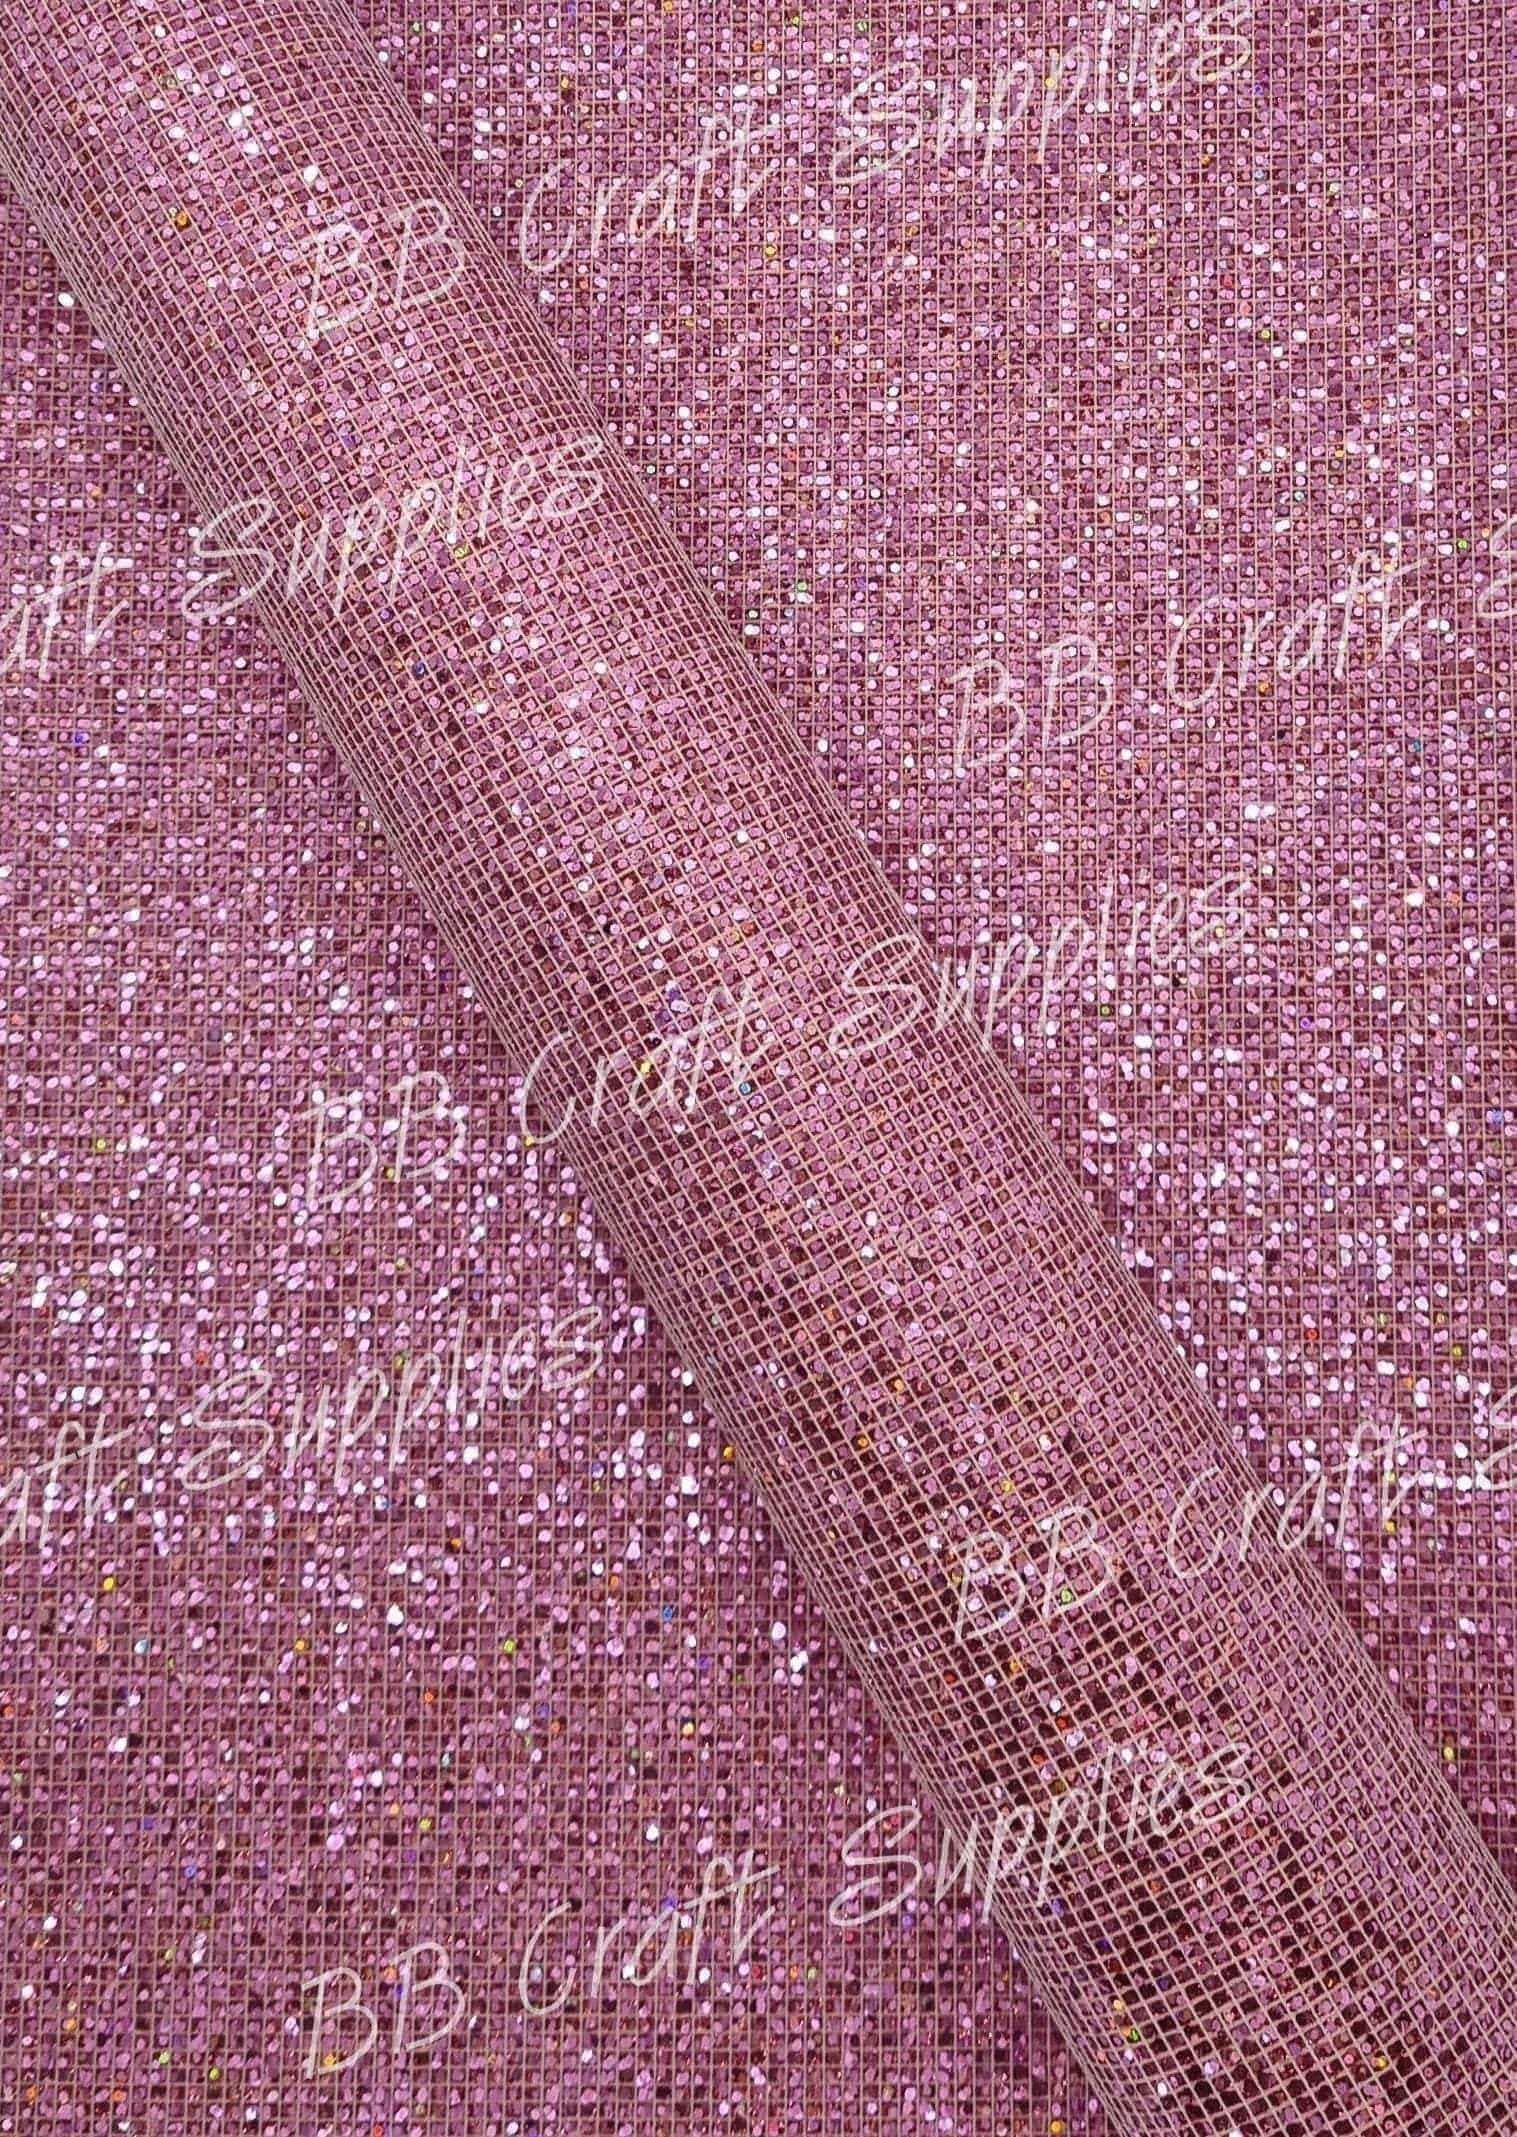 Pink Diamond Metallic Mesh - Diamond, Faux, Faux Leather, Leather, leatherette, Mesh, metalic, pink, shimmer, shine, Whats new - Bare Butler Faux Leather Supplies 